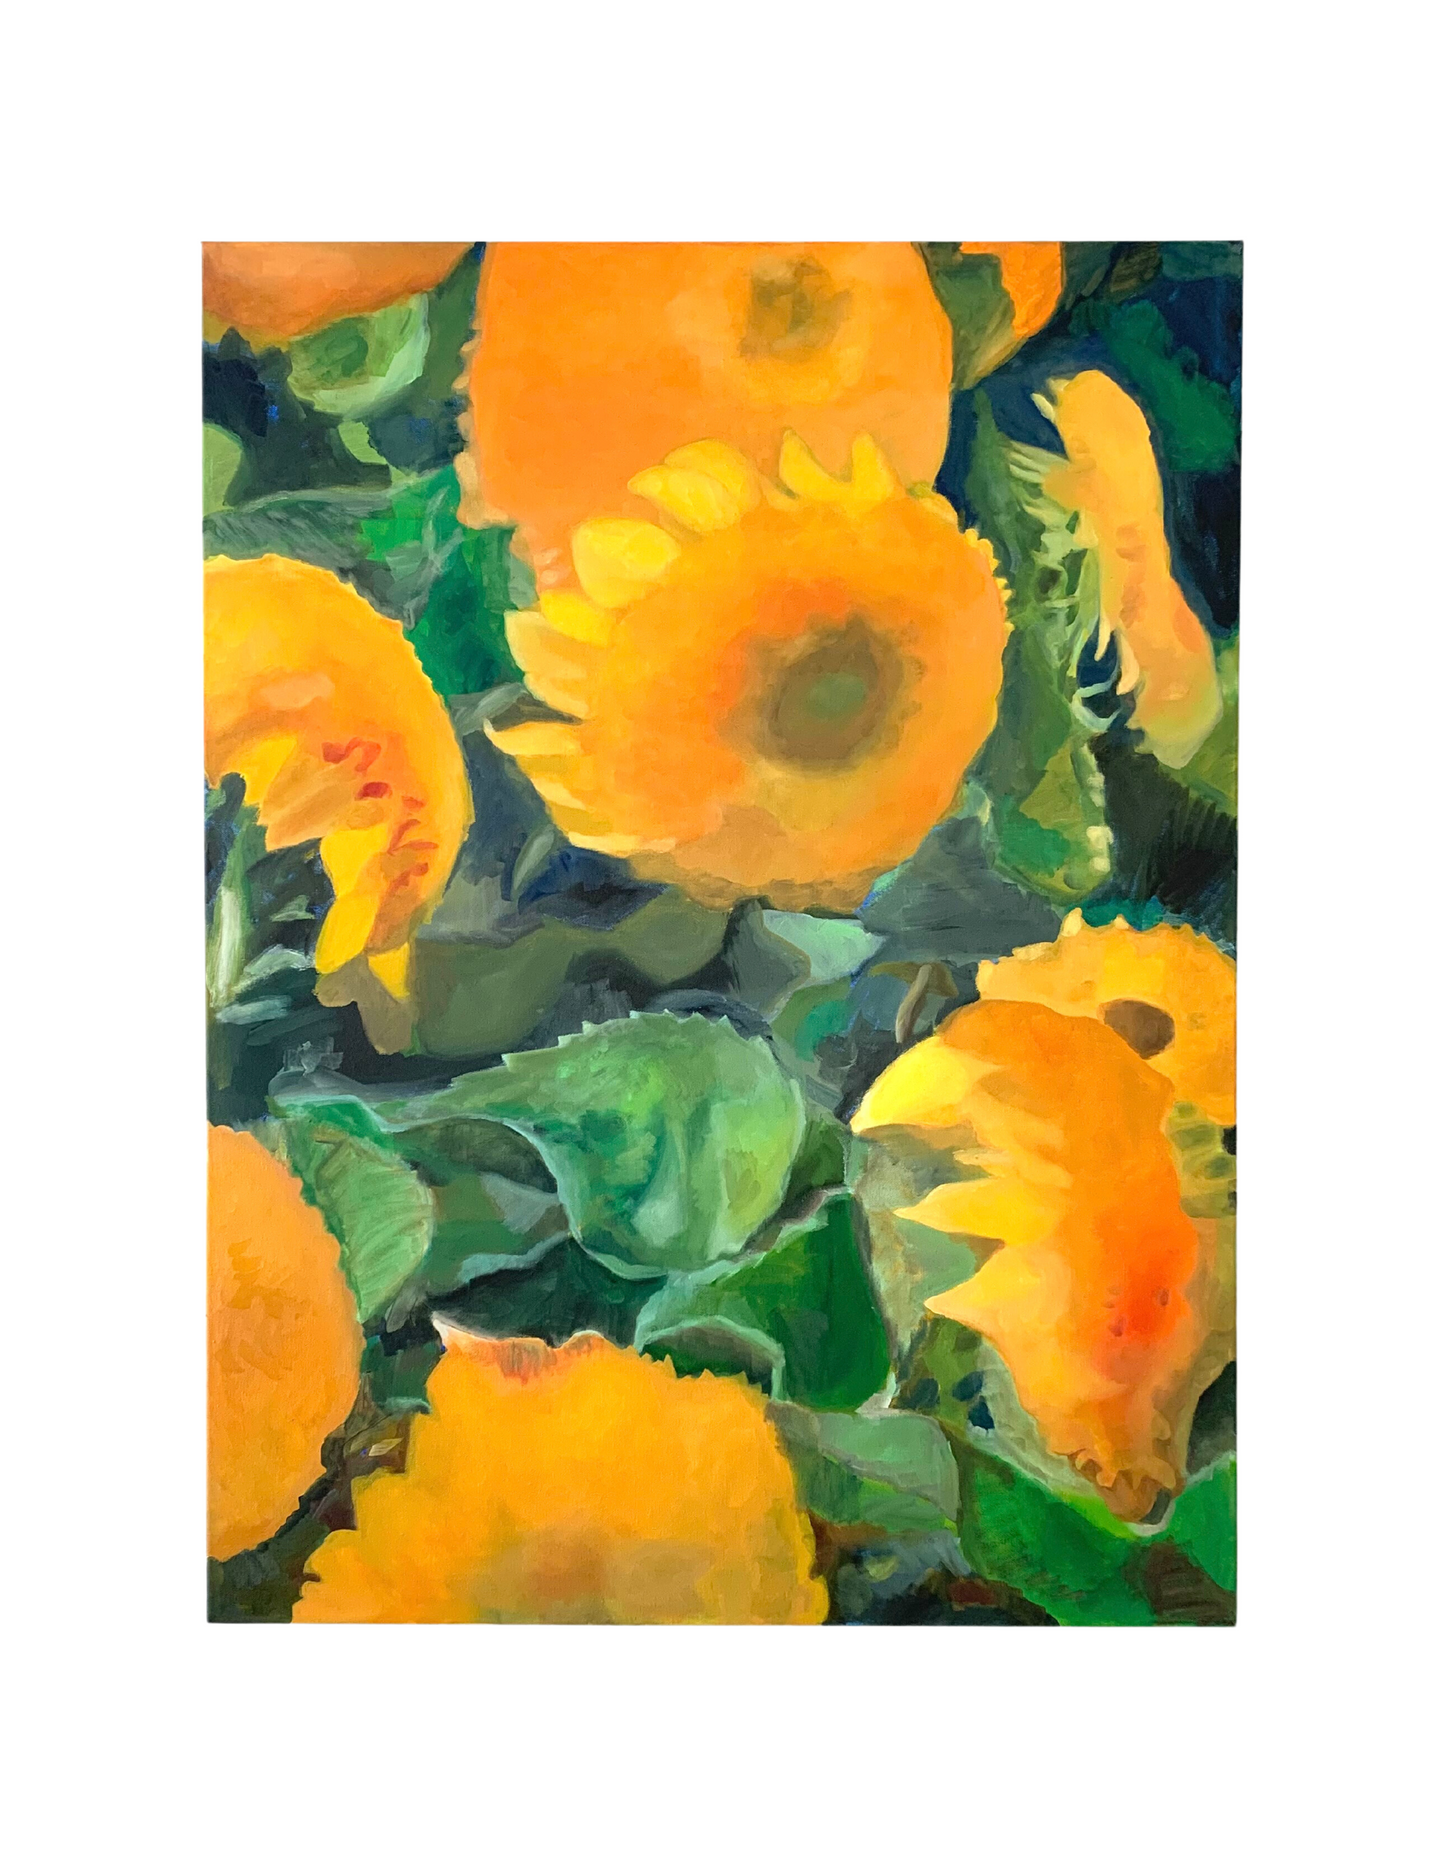 Sunflower Field 2 Original Oil Painting On Canvas